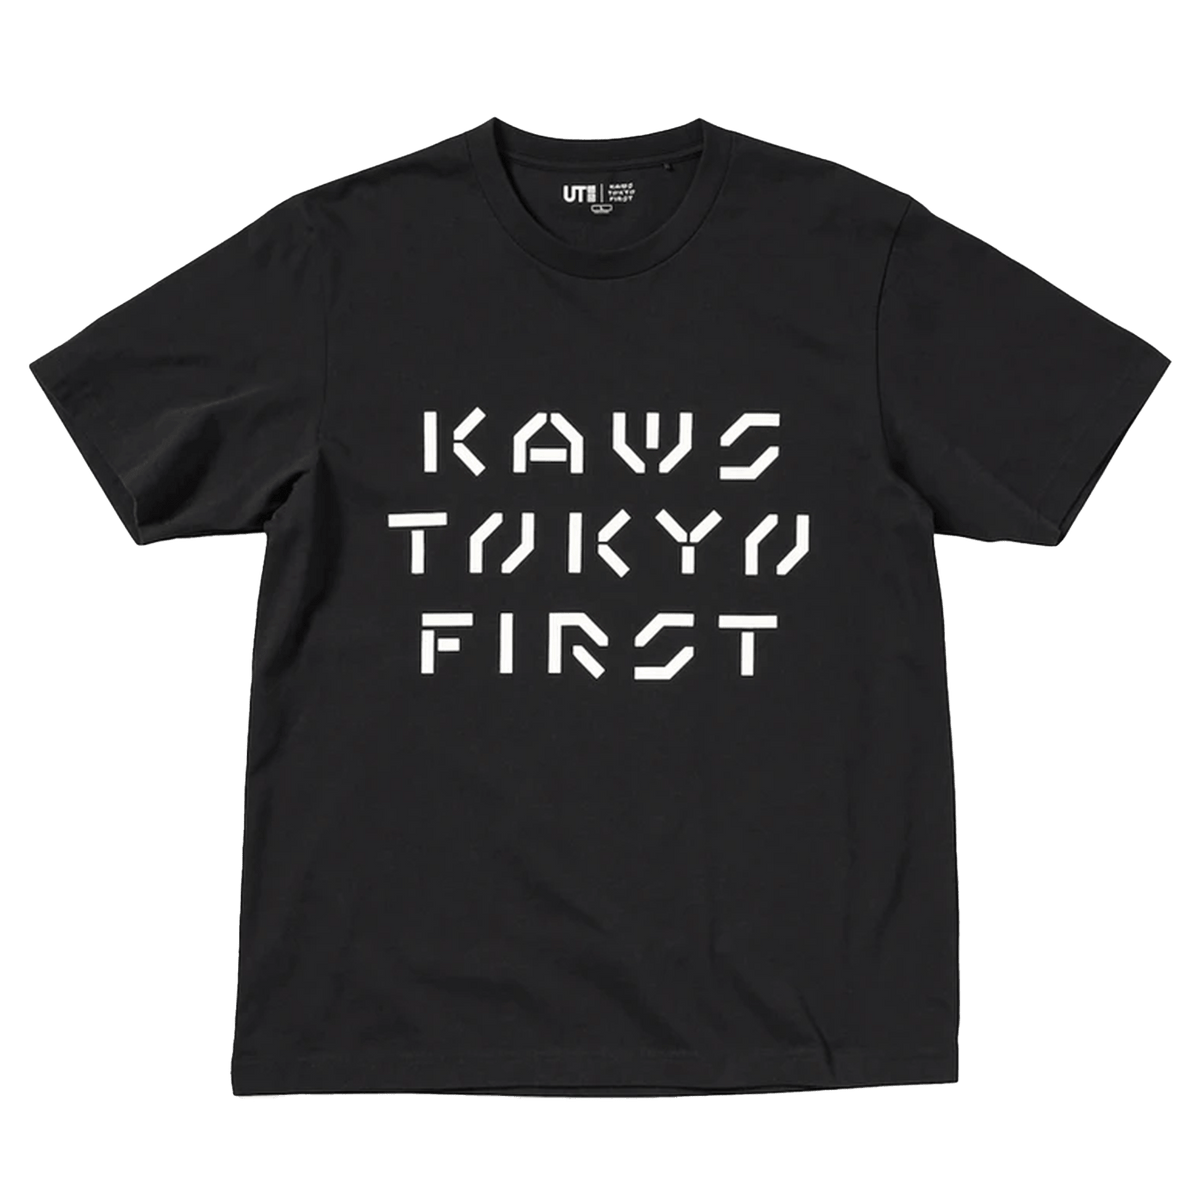 KAWS x Uniqlo Tokyo First Tee (Asia Sizing) Black - UrlfreezeShops